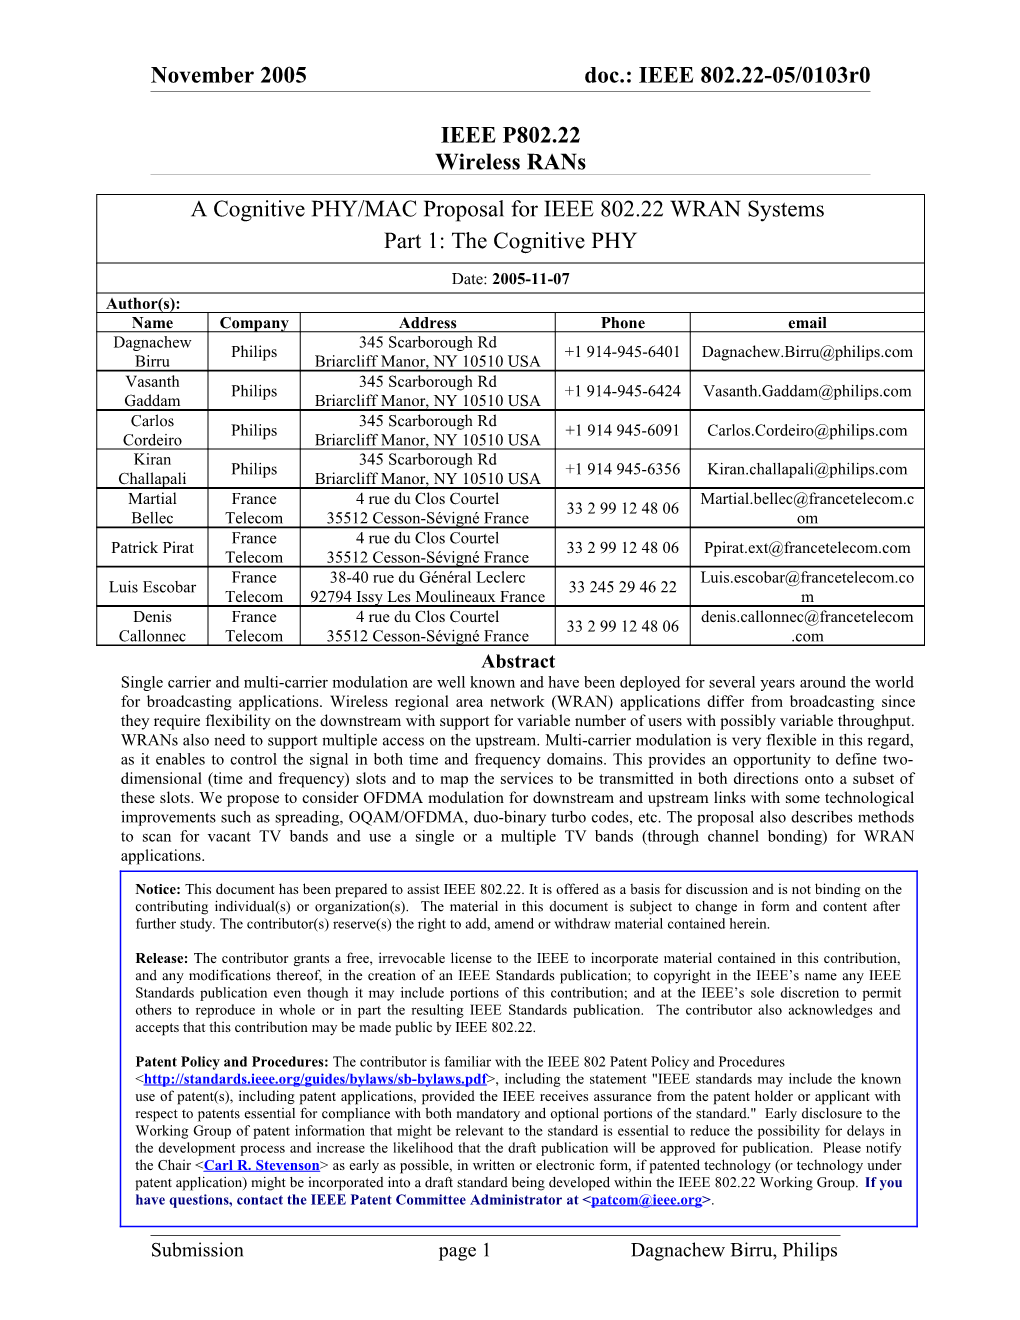 IEEE P802.22 Wireless Rans